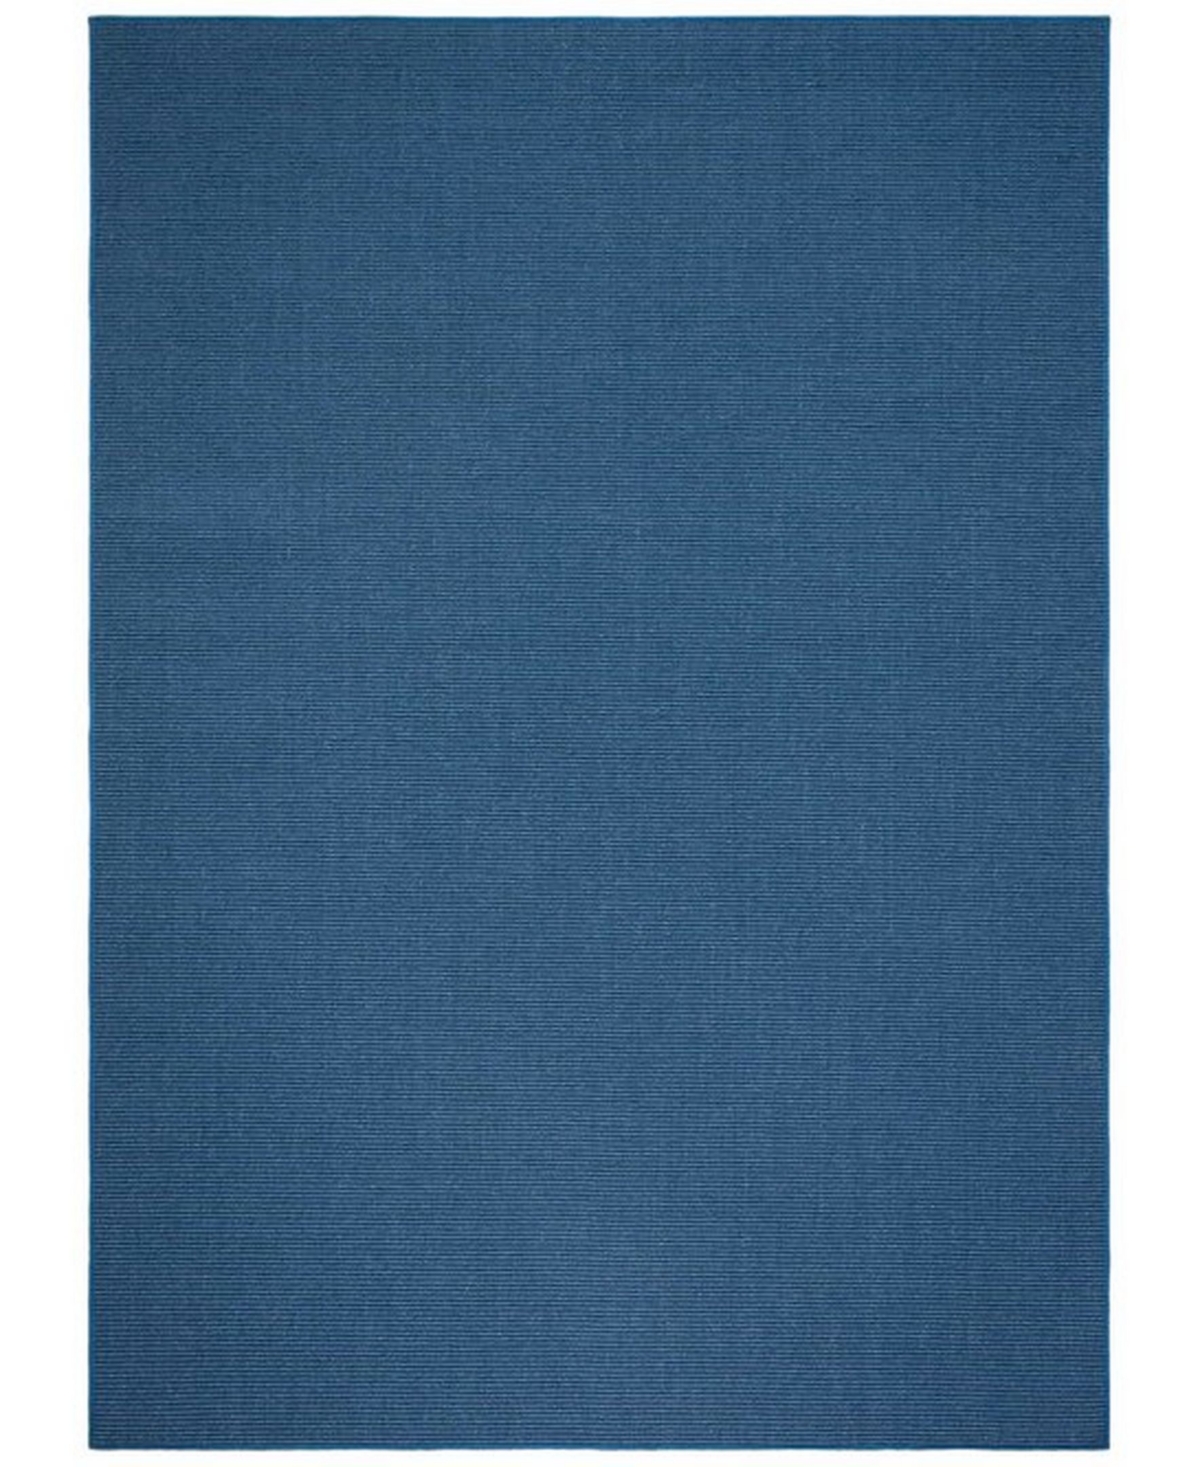 Martha Stewart Collection MSR9501M Blue 8' x 10' Area Rug - Blue